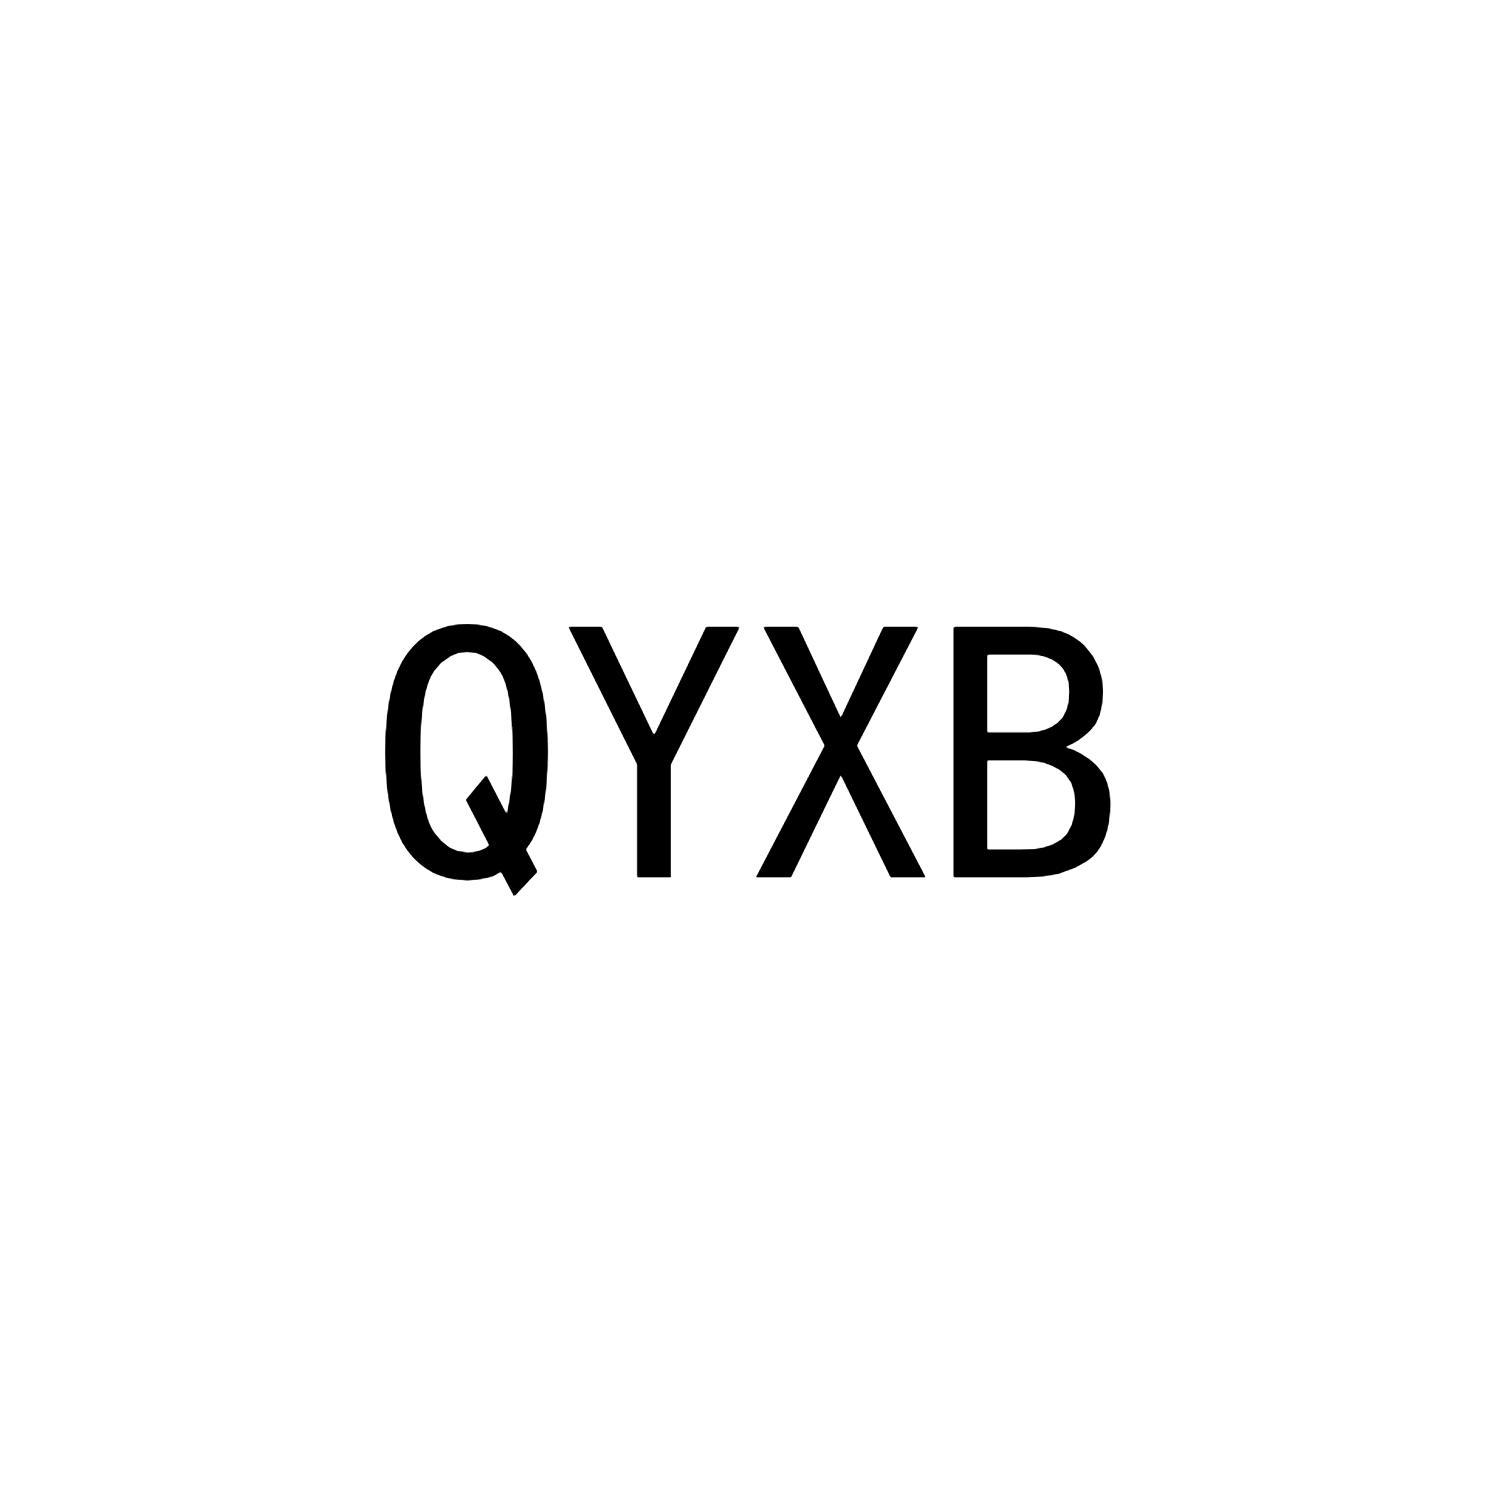 QYXB